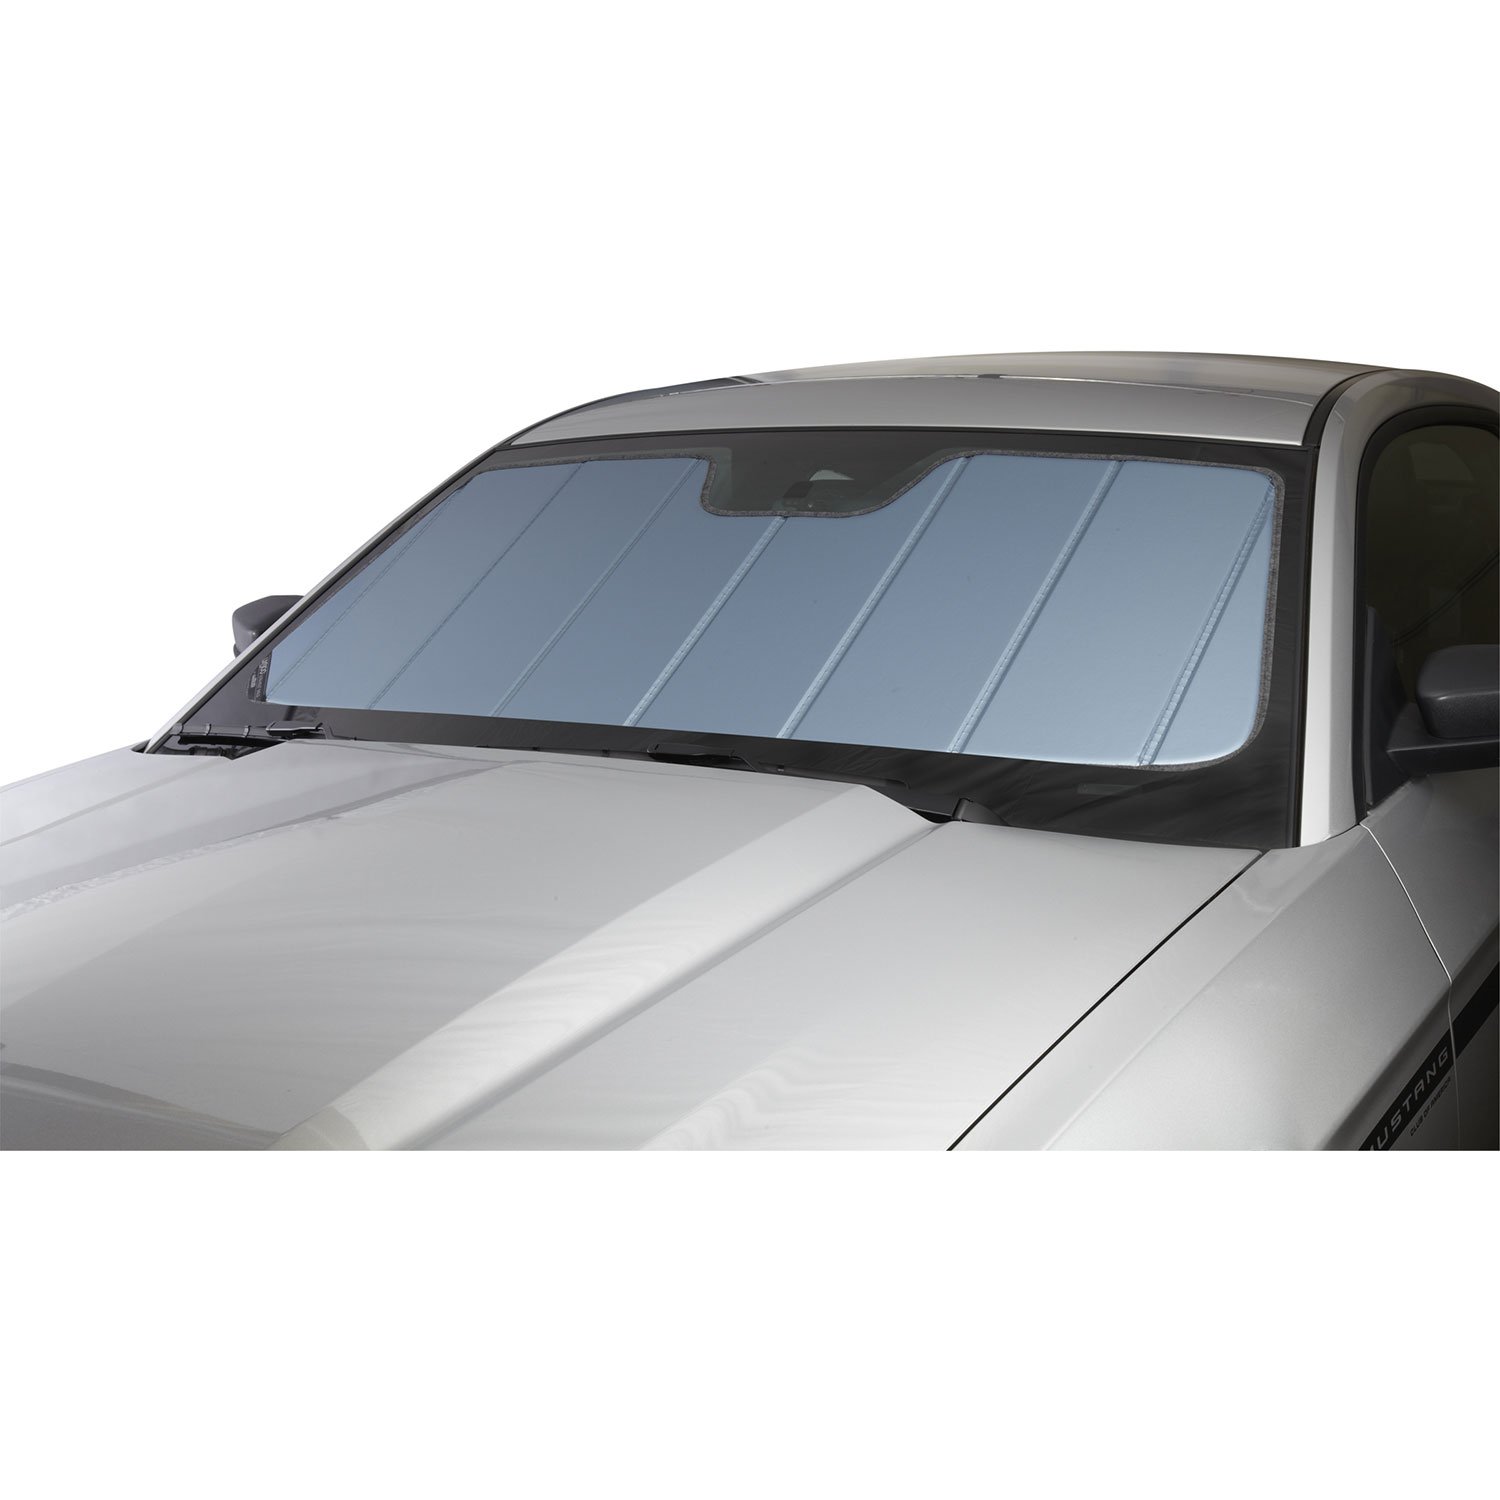 Covercraft UVS100 Custom Sonnenschutz | UV11372BL | Kompatibel mit Select Ford Mustang Modellen, Blau Metallic von Covercraft